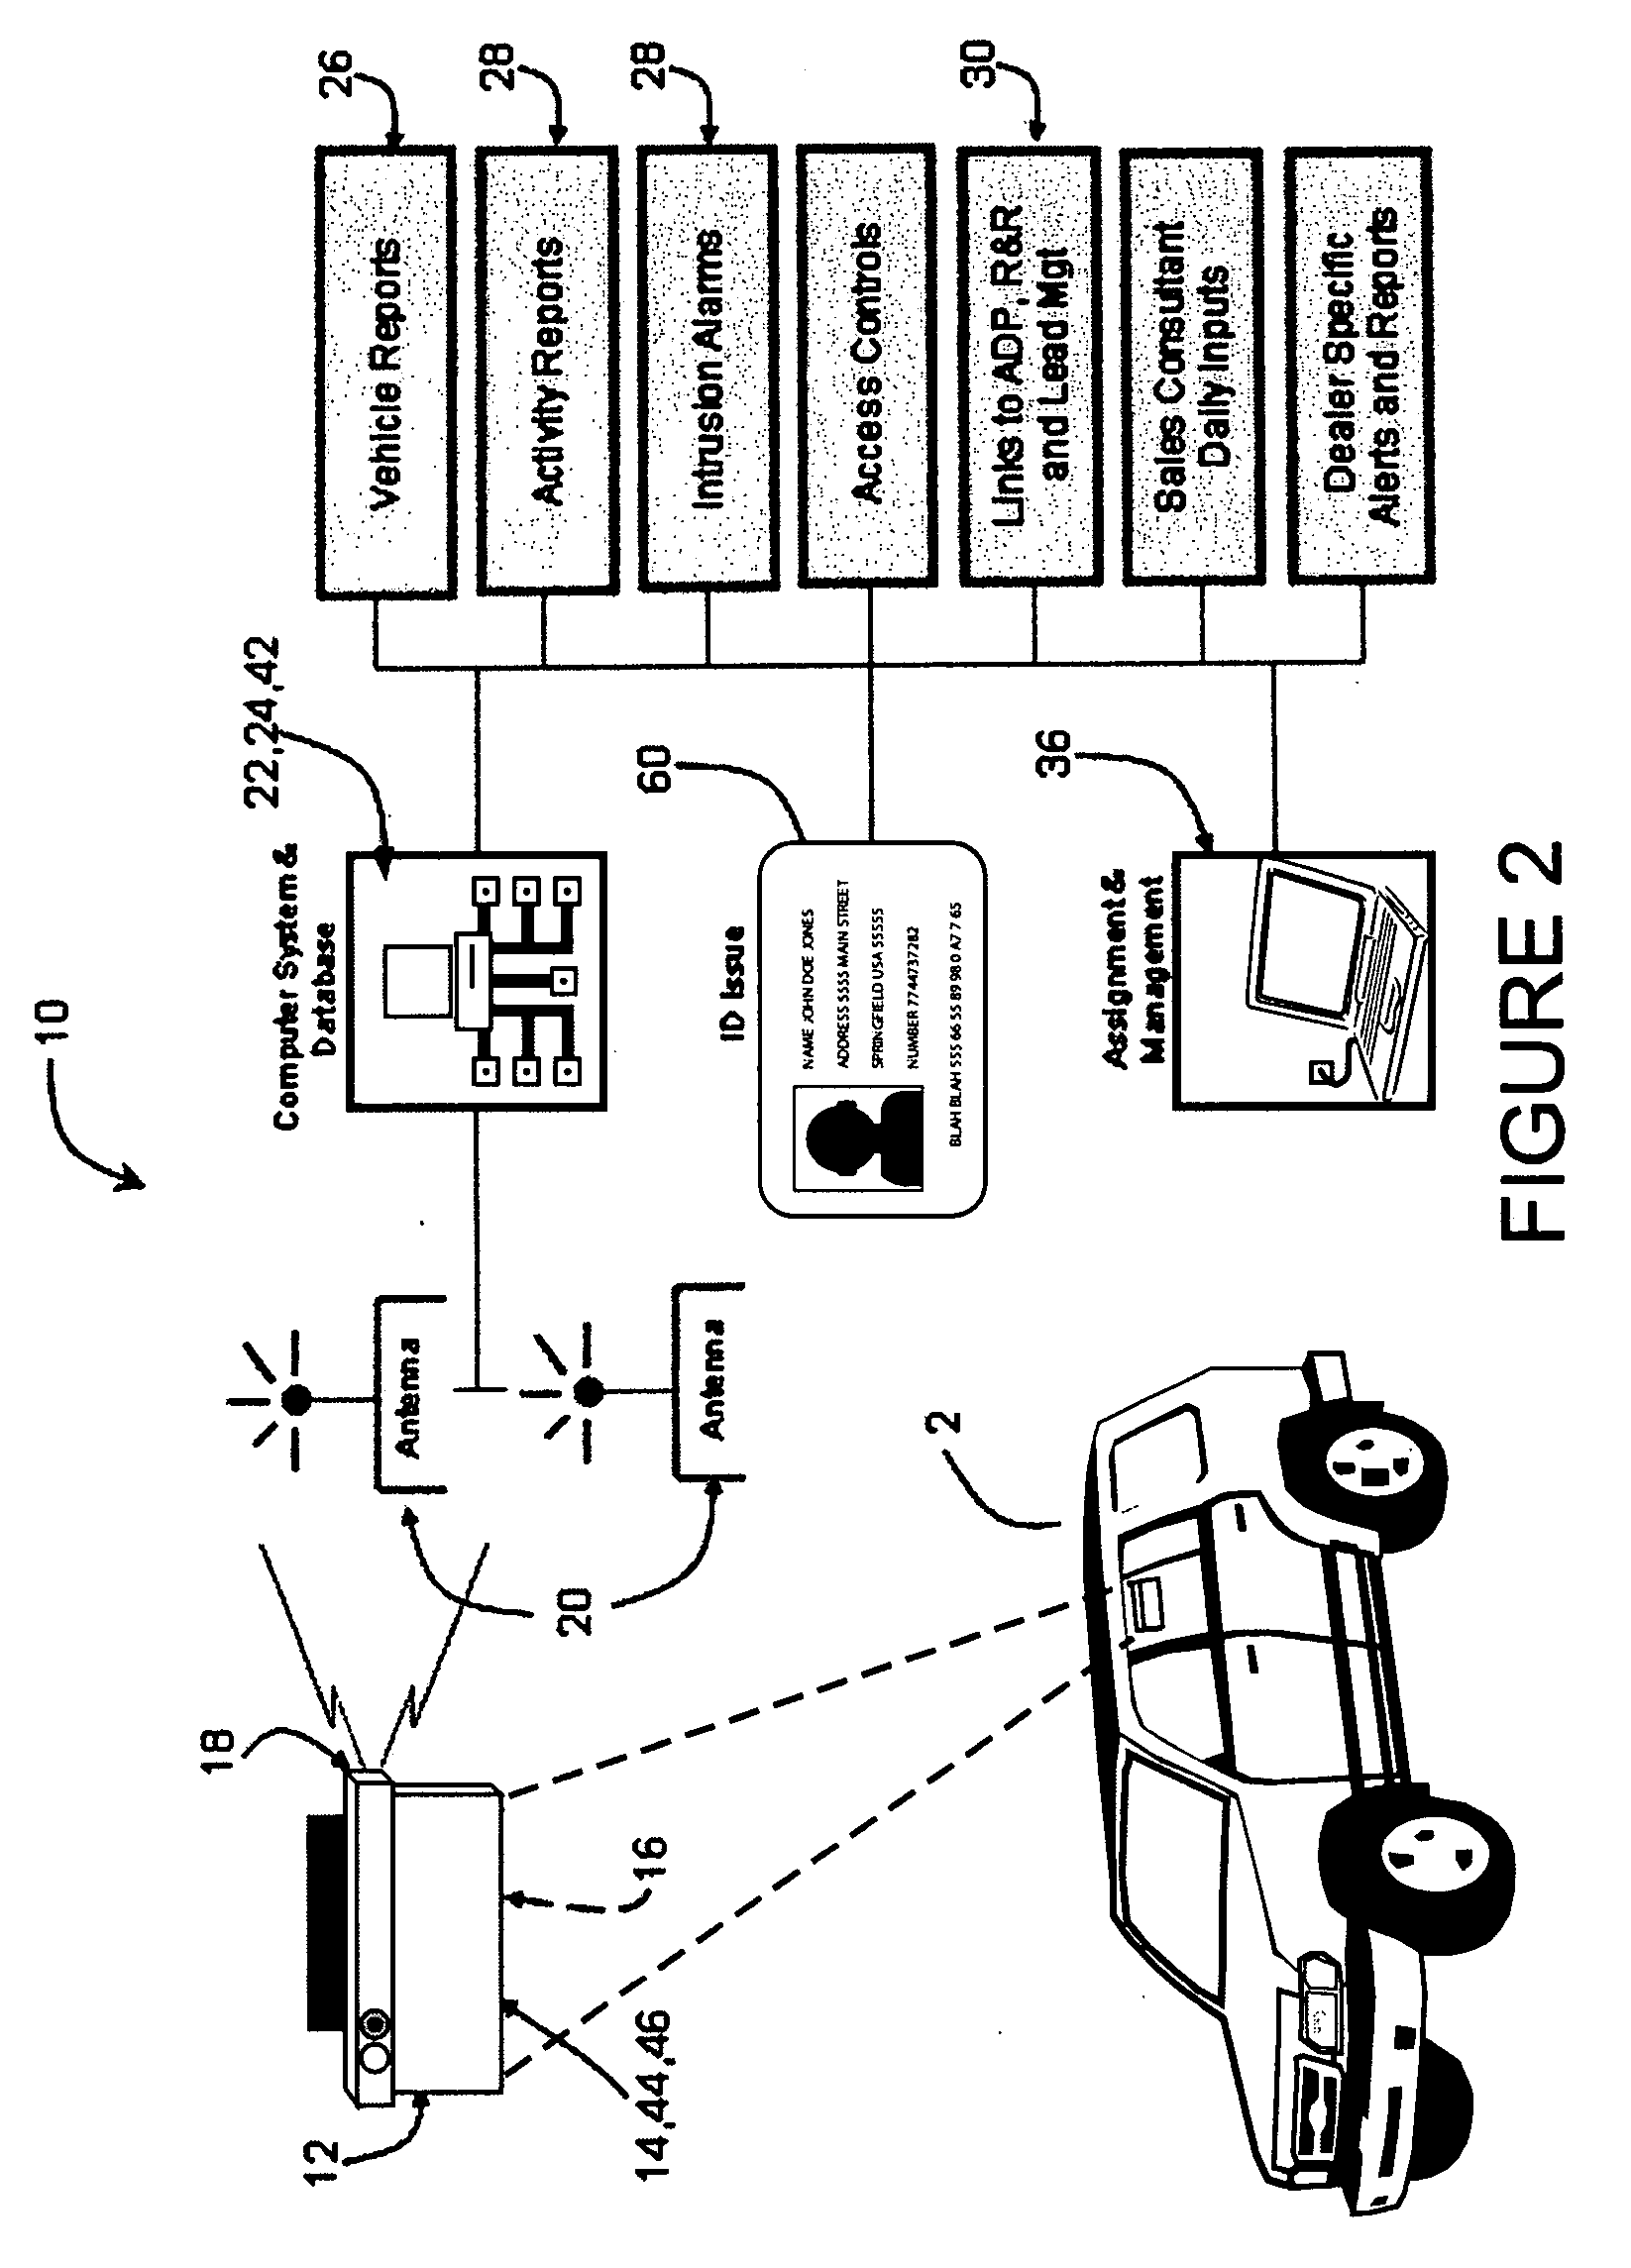 Vehicle activity module